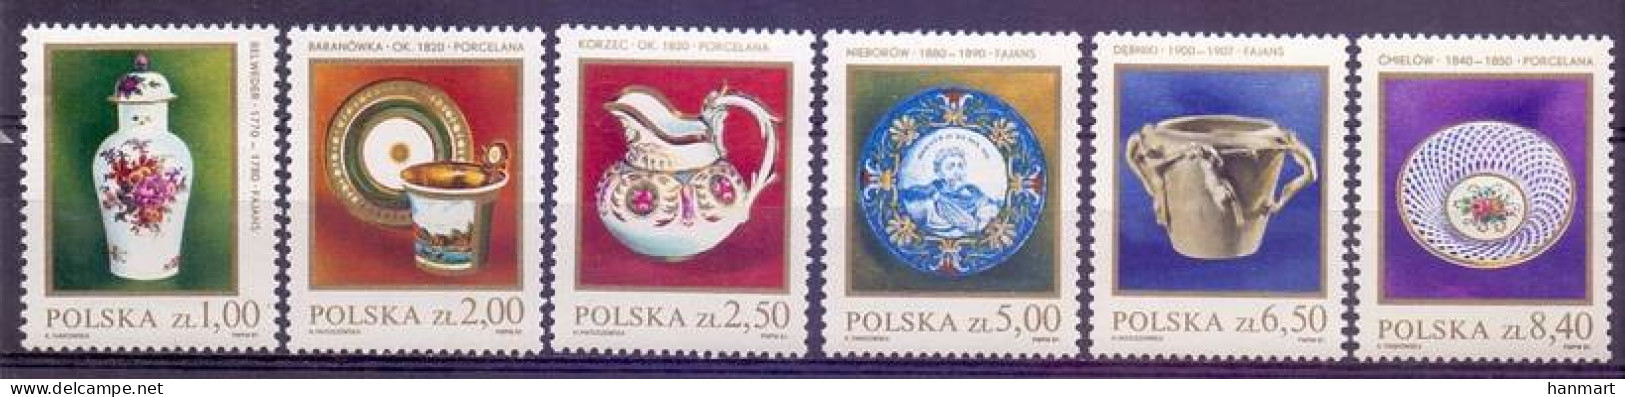 Poland 1981 Mi 2739-2744 Fi 2596-2601 MNH  (ZE4 PLD2739-2744) - Porzellan